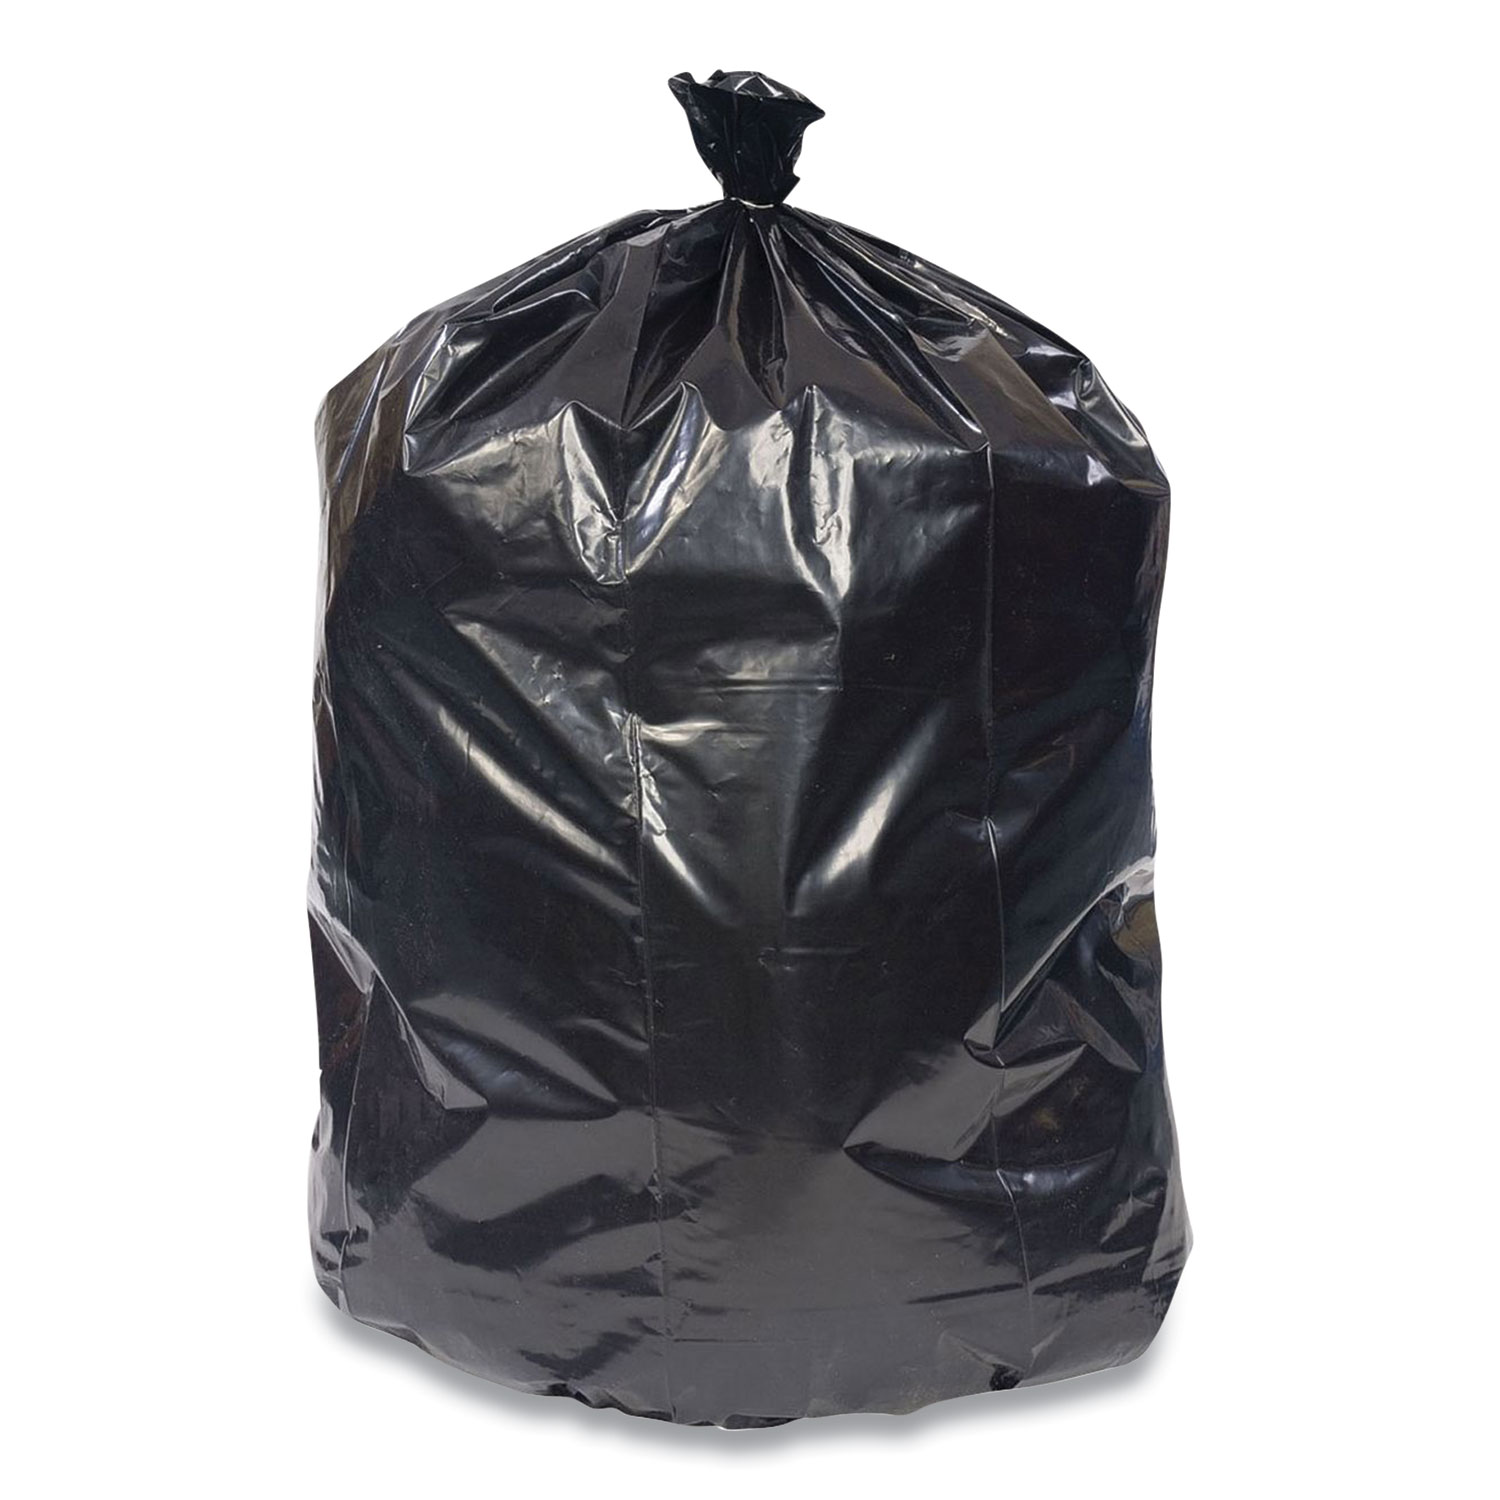 19*22 inch Garbage Bags- Medium 19 x 22, Capacity: 10-30 Litre